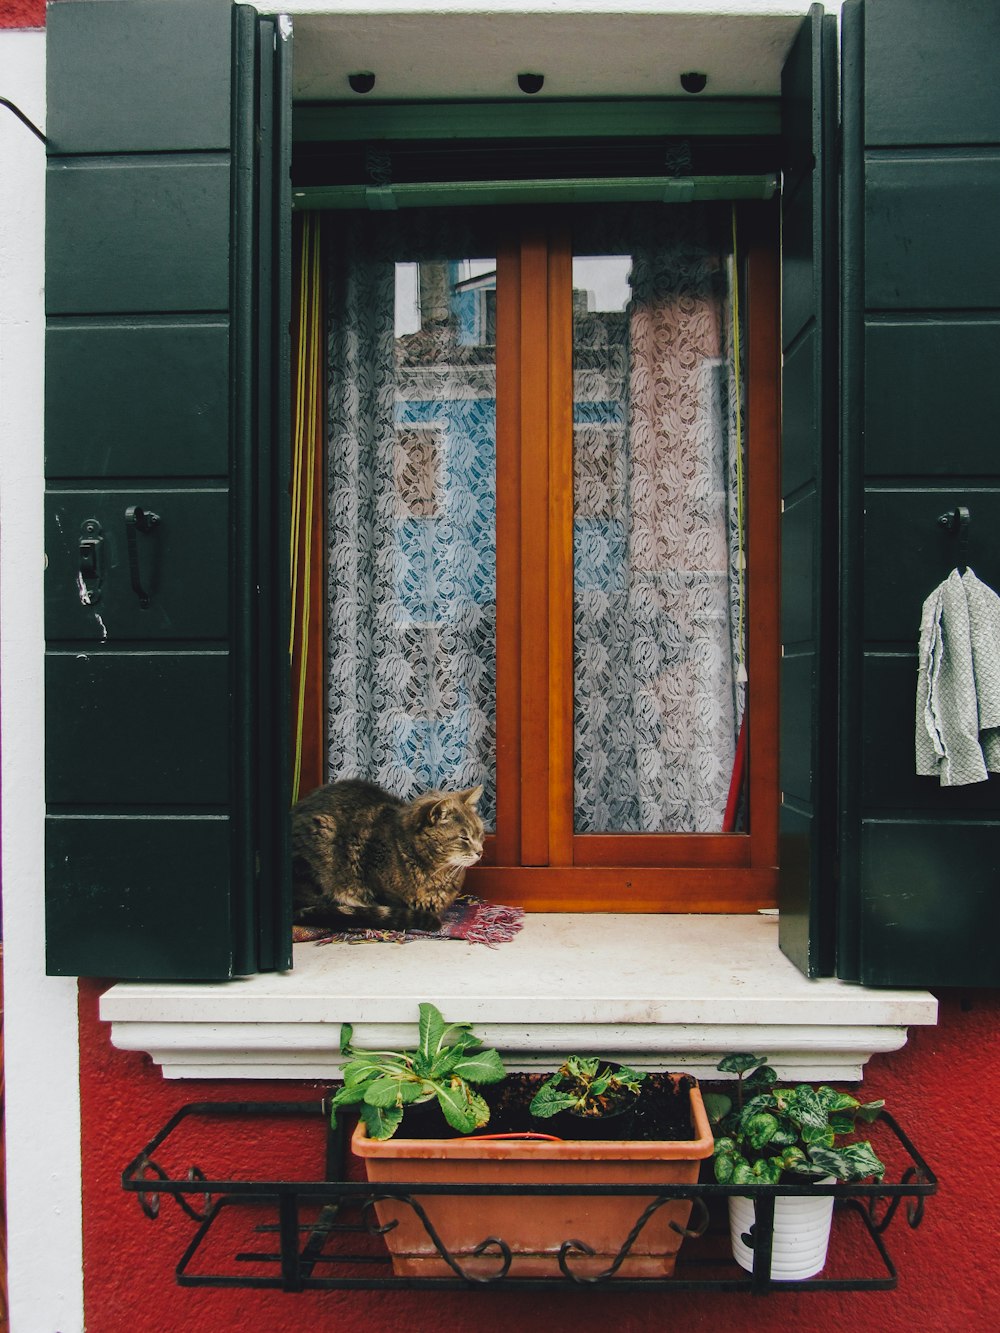 a cat sitting on a window sill